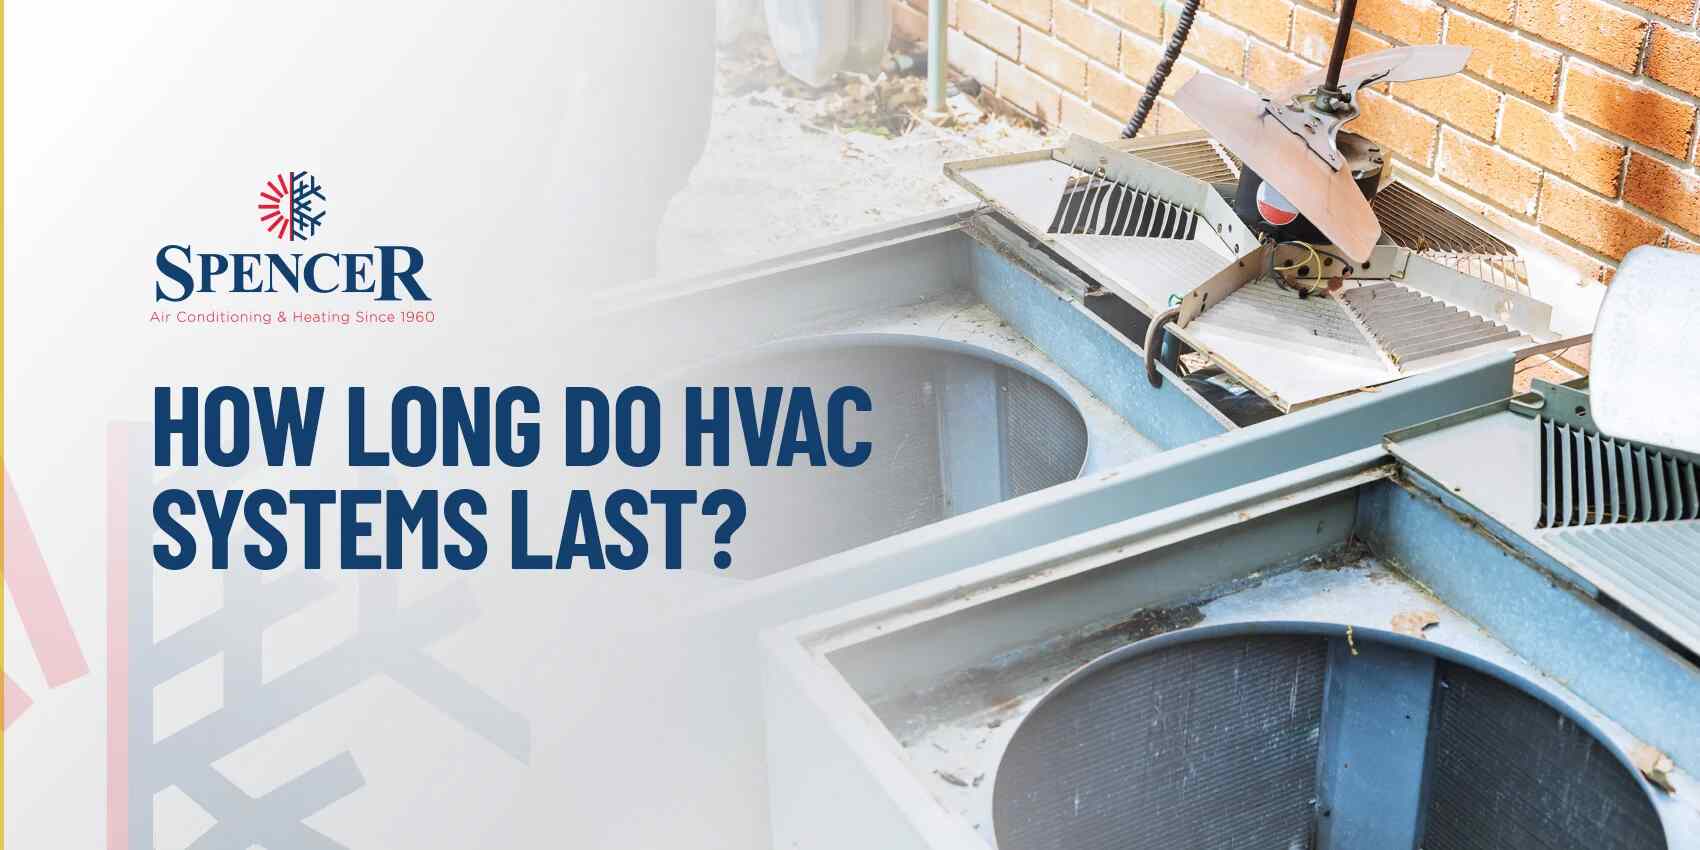 spencer how long do HVAC systems last? blog post title